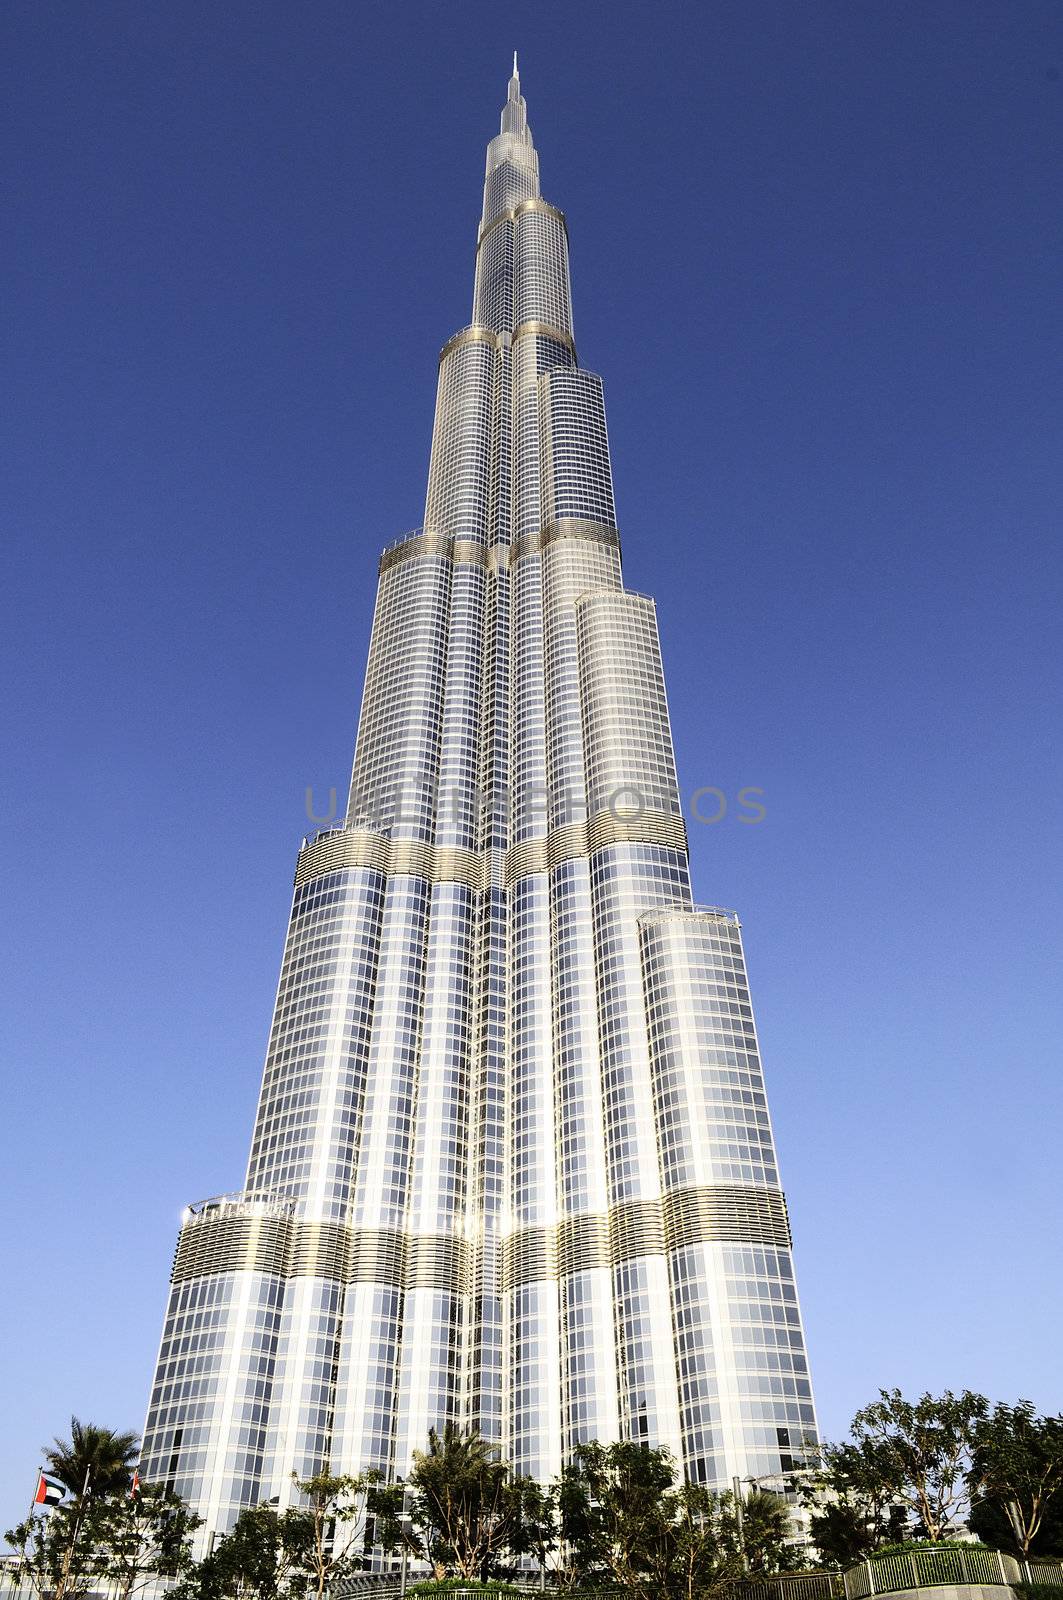 DUBAI, UAE - FEBRUARY 22: DUBAI, UAE - FEB 22: The Address Hotel in the downtown Dubai area overlooks the dancing fountains, and Burj Khalifa facade on February 22, 2012 in Dubai, UAE. Burj Khalifa is a tallest building in the world, at 828m. Located on Downtown Dubai, 